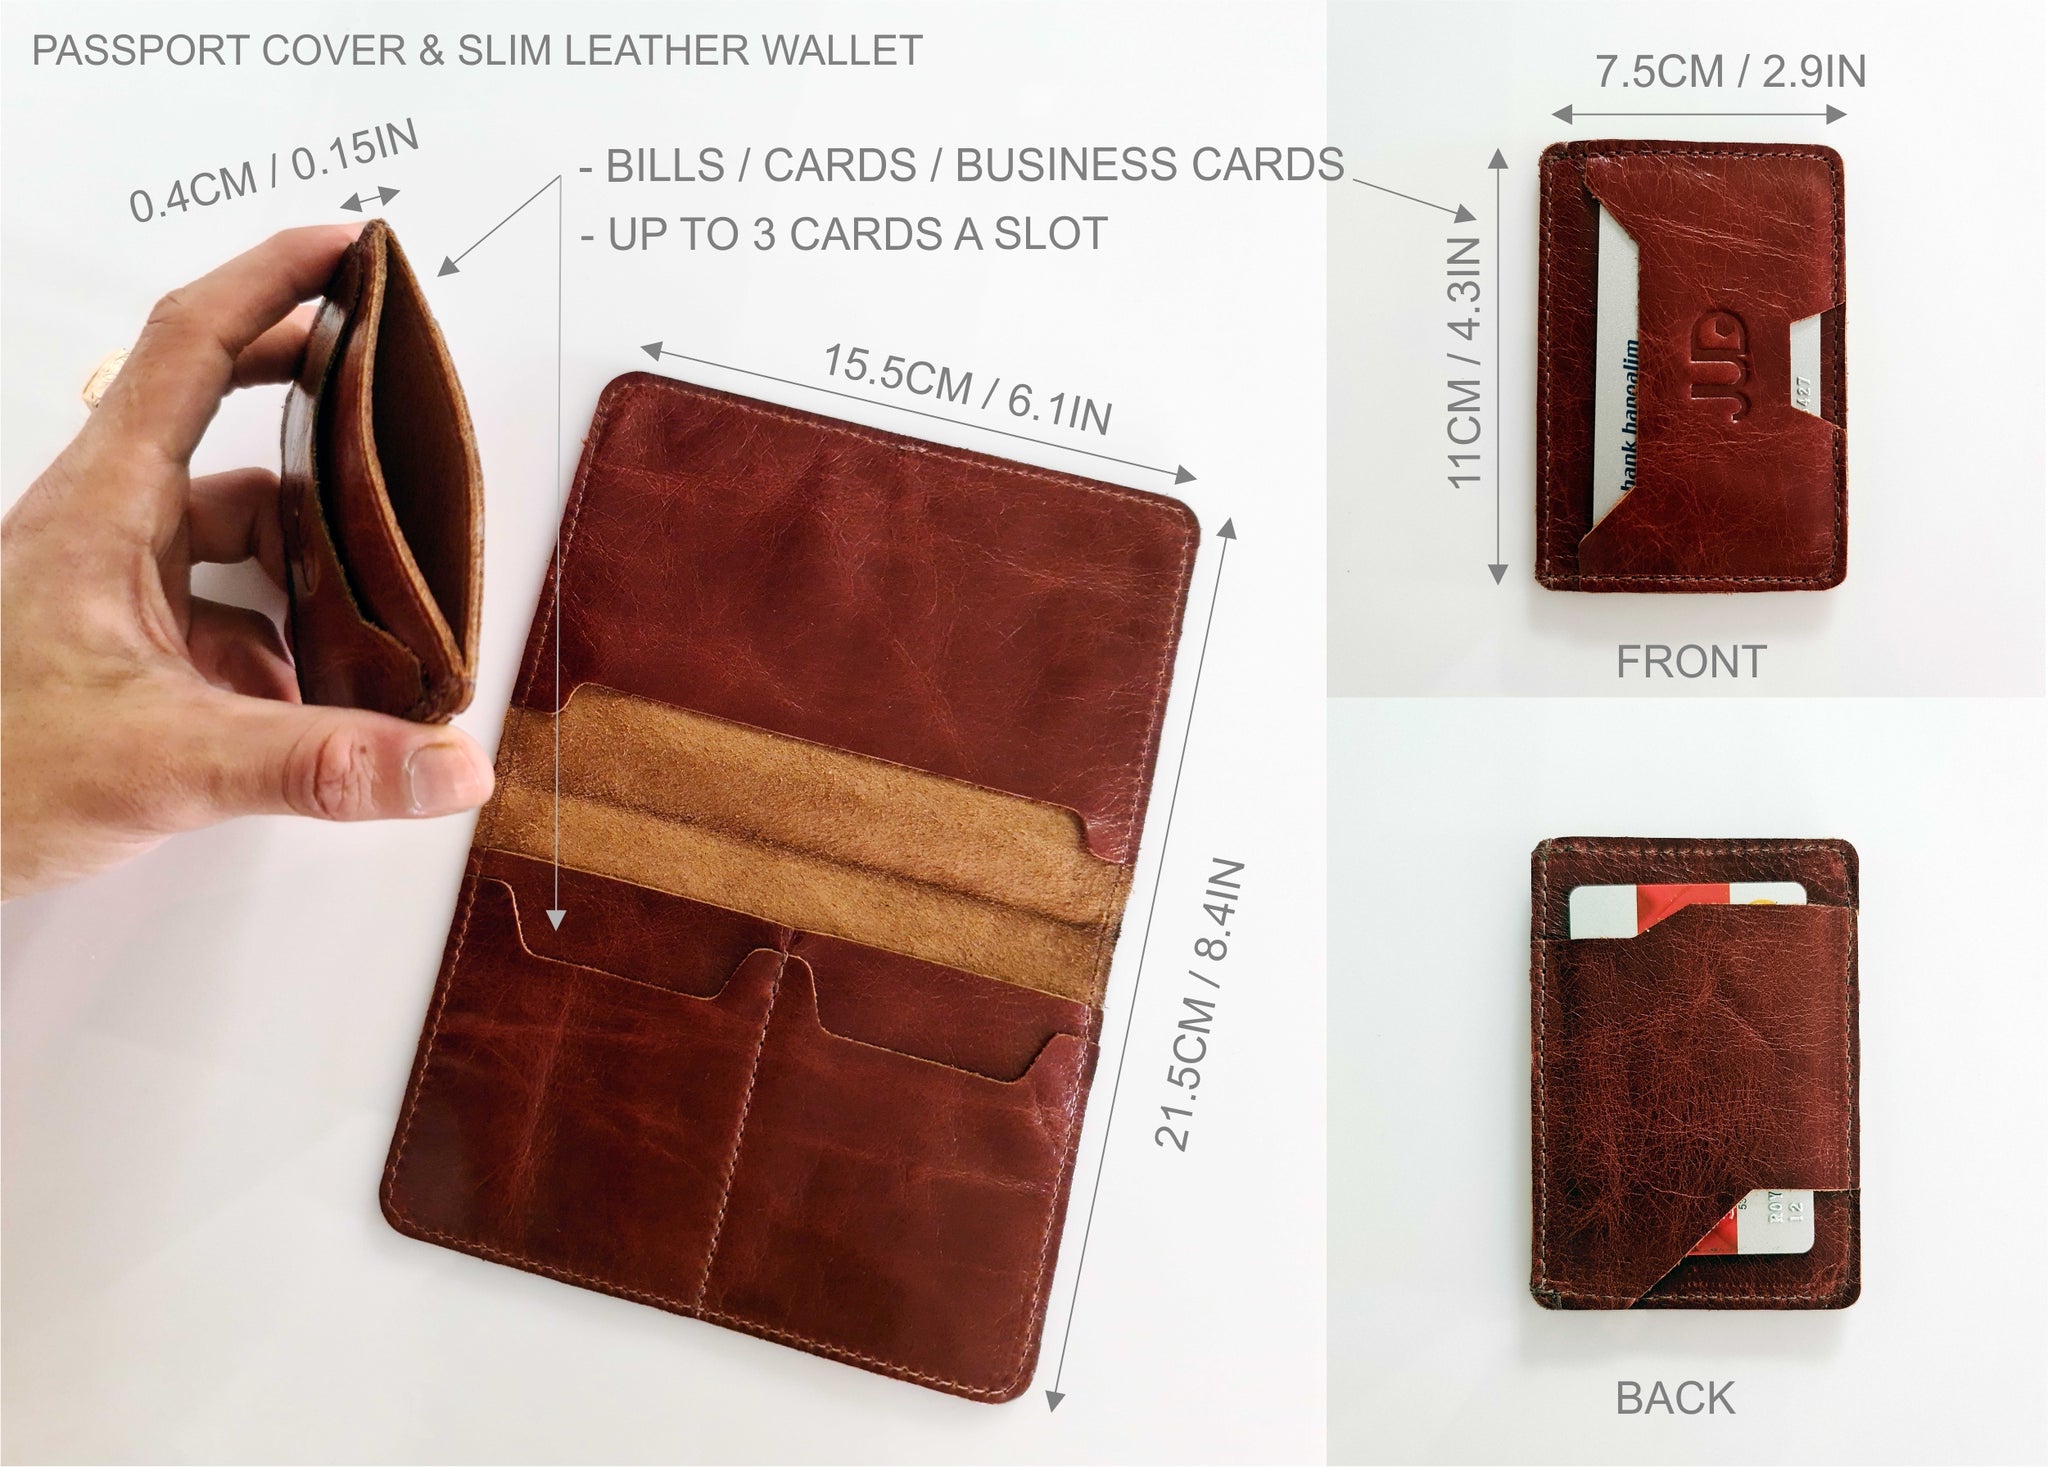 Modern Passport Wallet, Textured Navy, Small Leather Goods